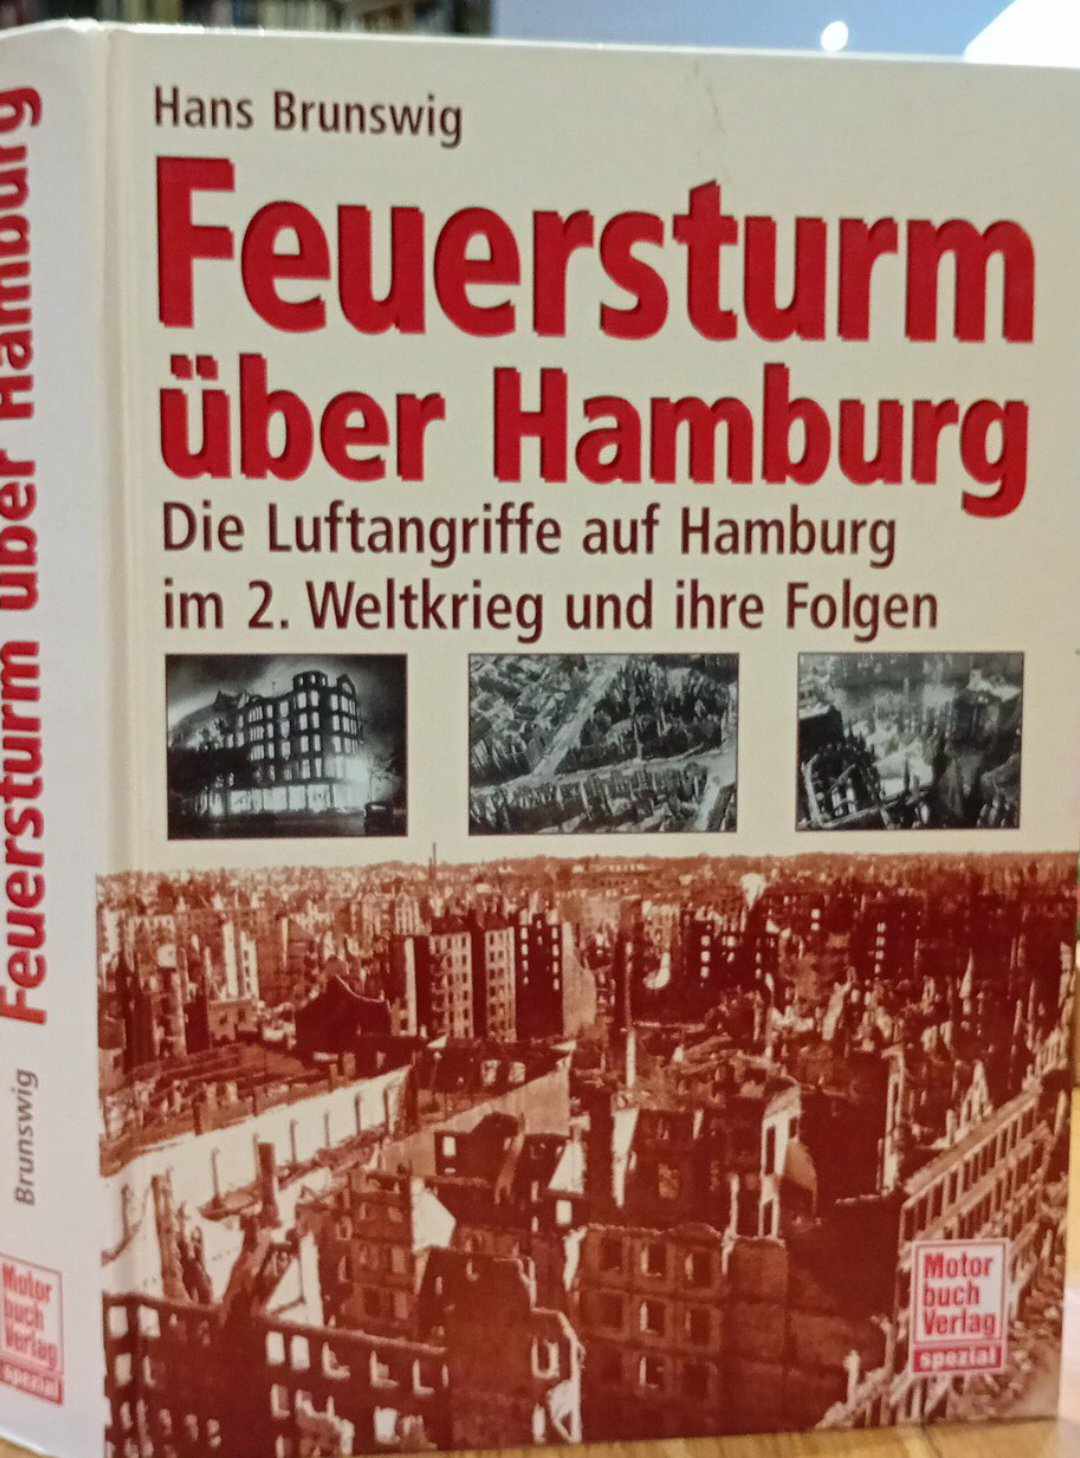 Feuersturm uber Hamburg - luftangriffe 2e weltkrieg / 470 blz